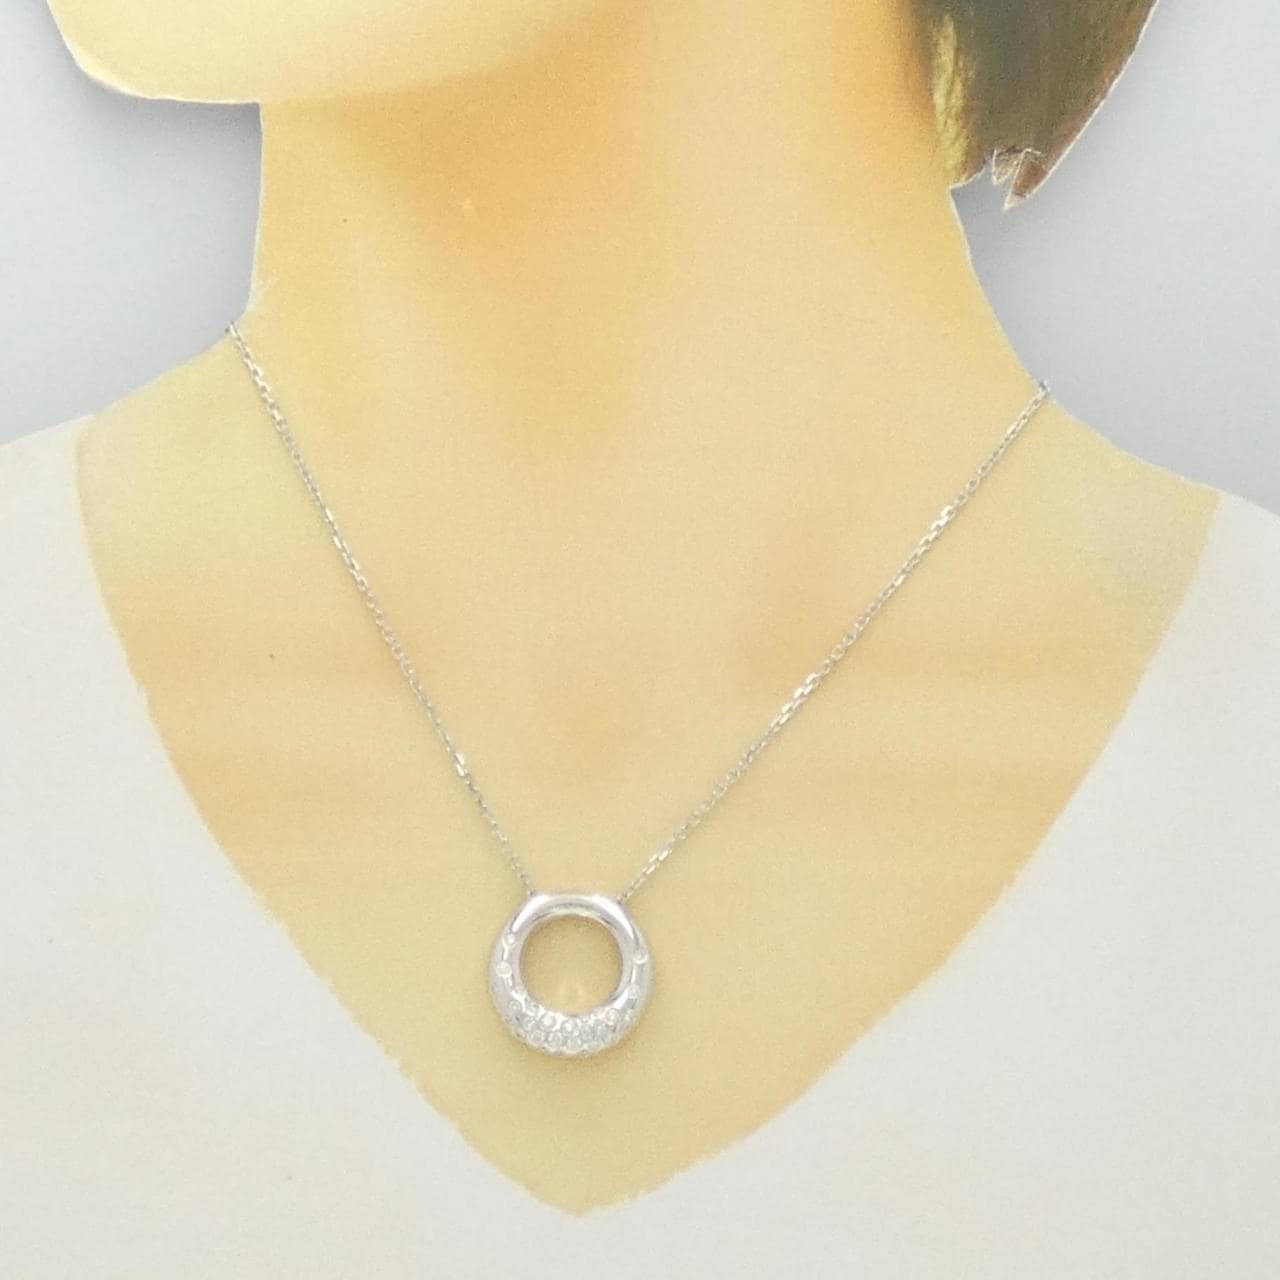 K18WG/PT Diamond necklace 0.70CT